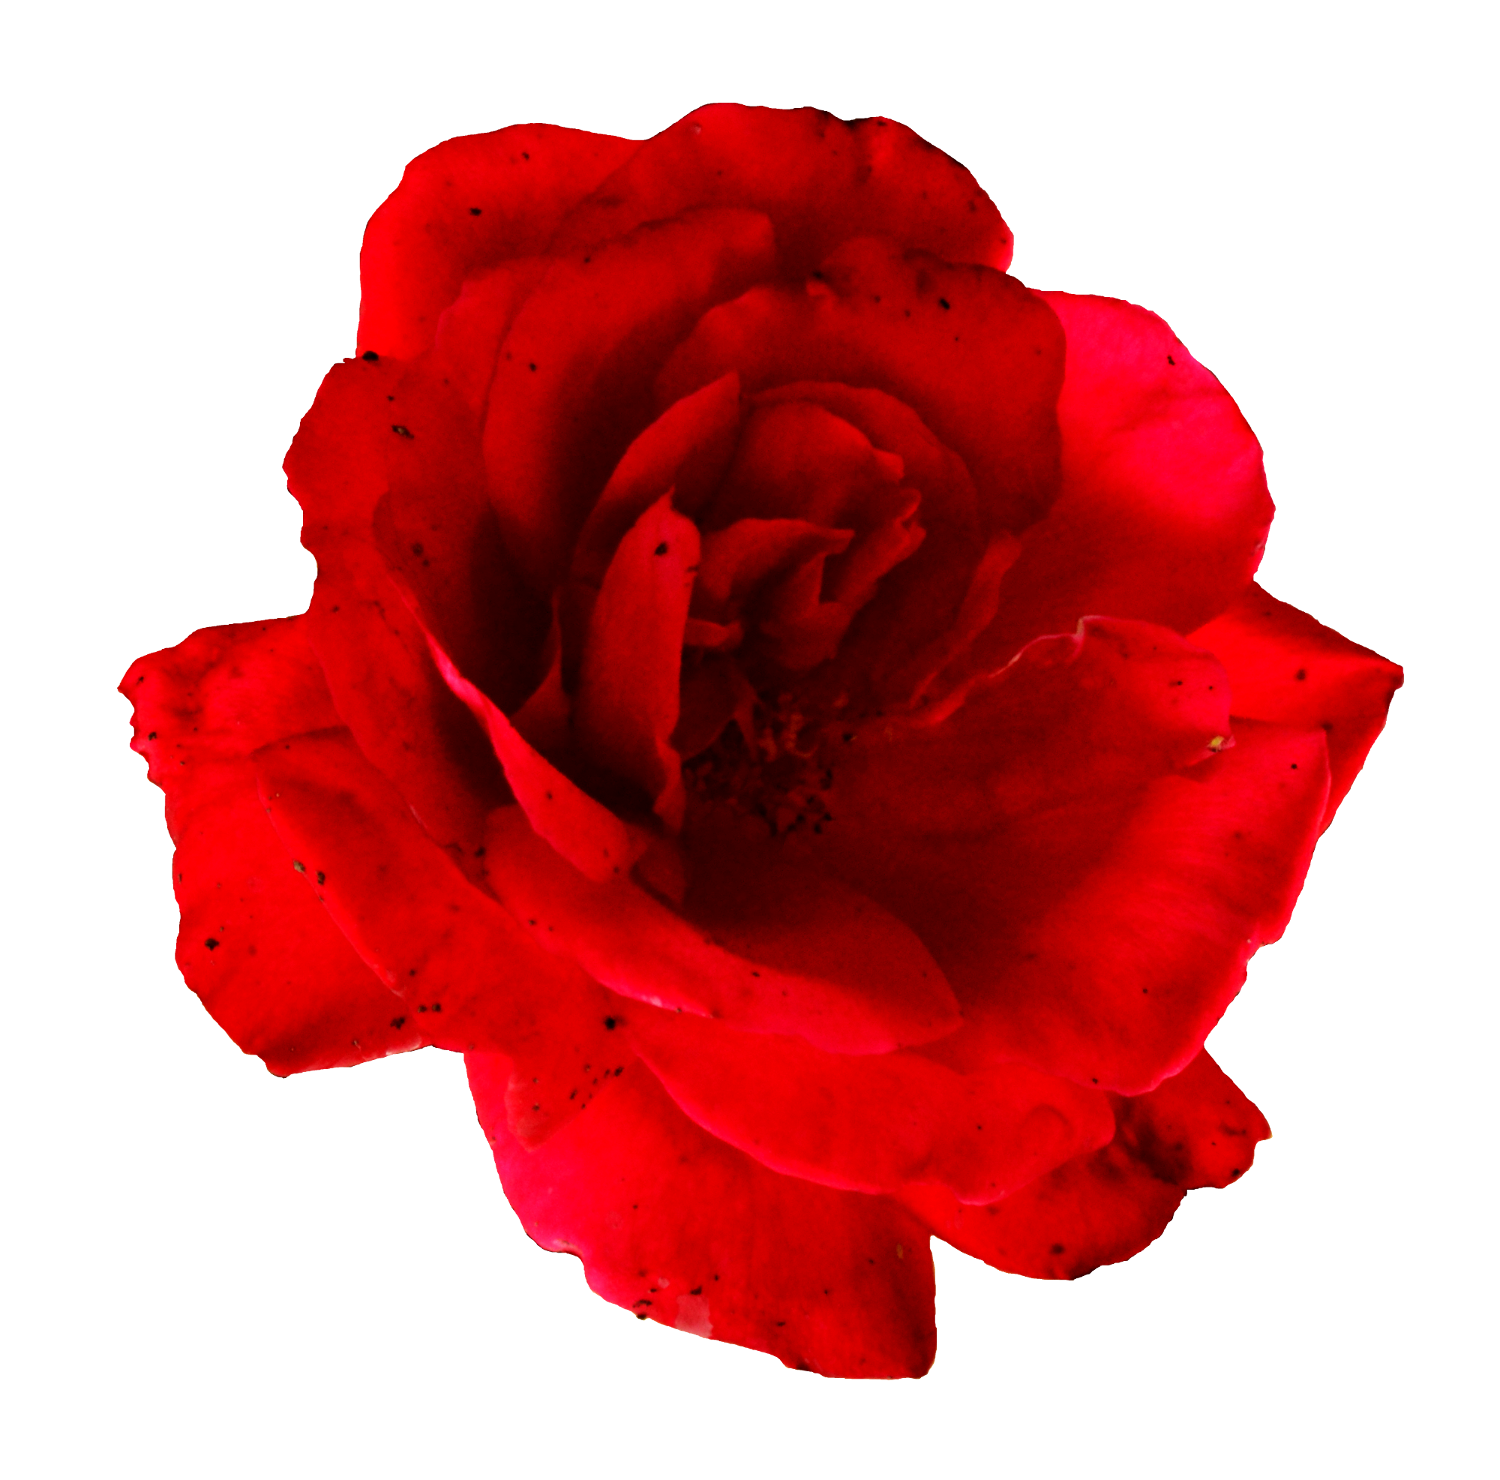  flower red image. Rose png images